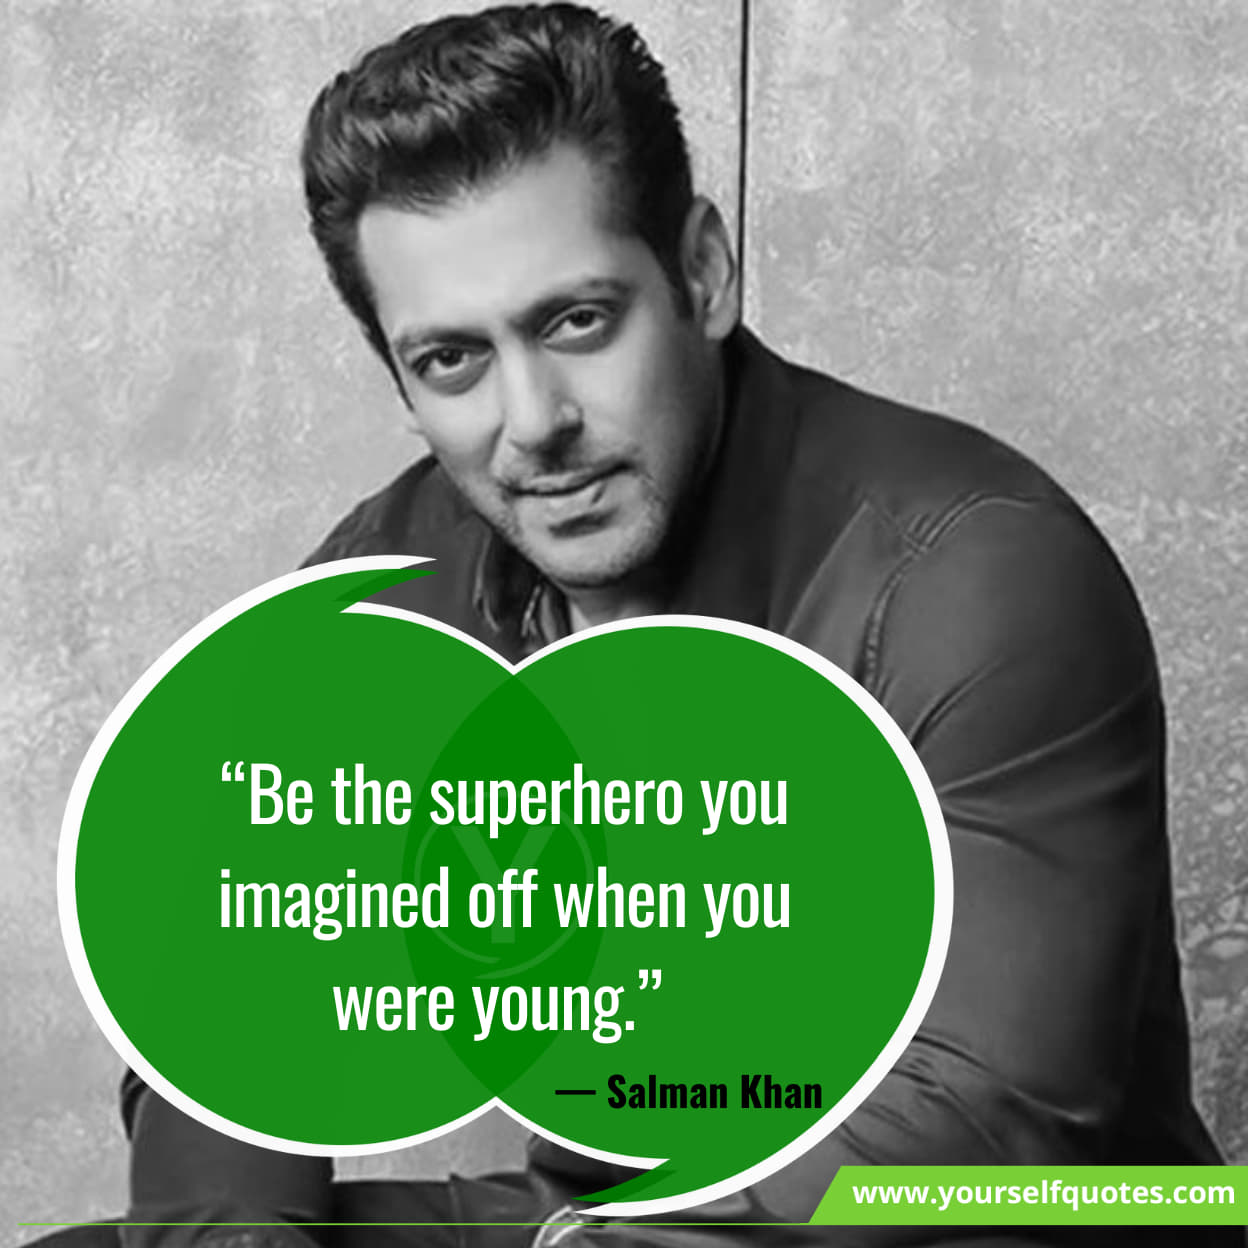 Salman Khan Motivational Quotes About Life